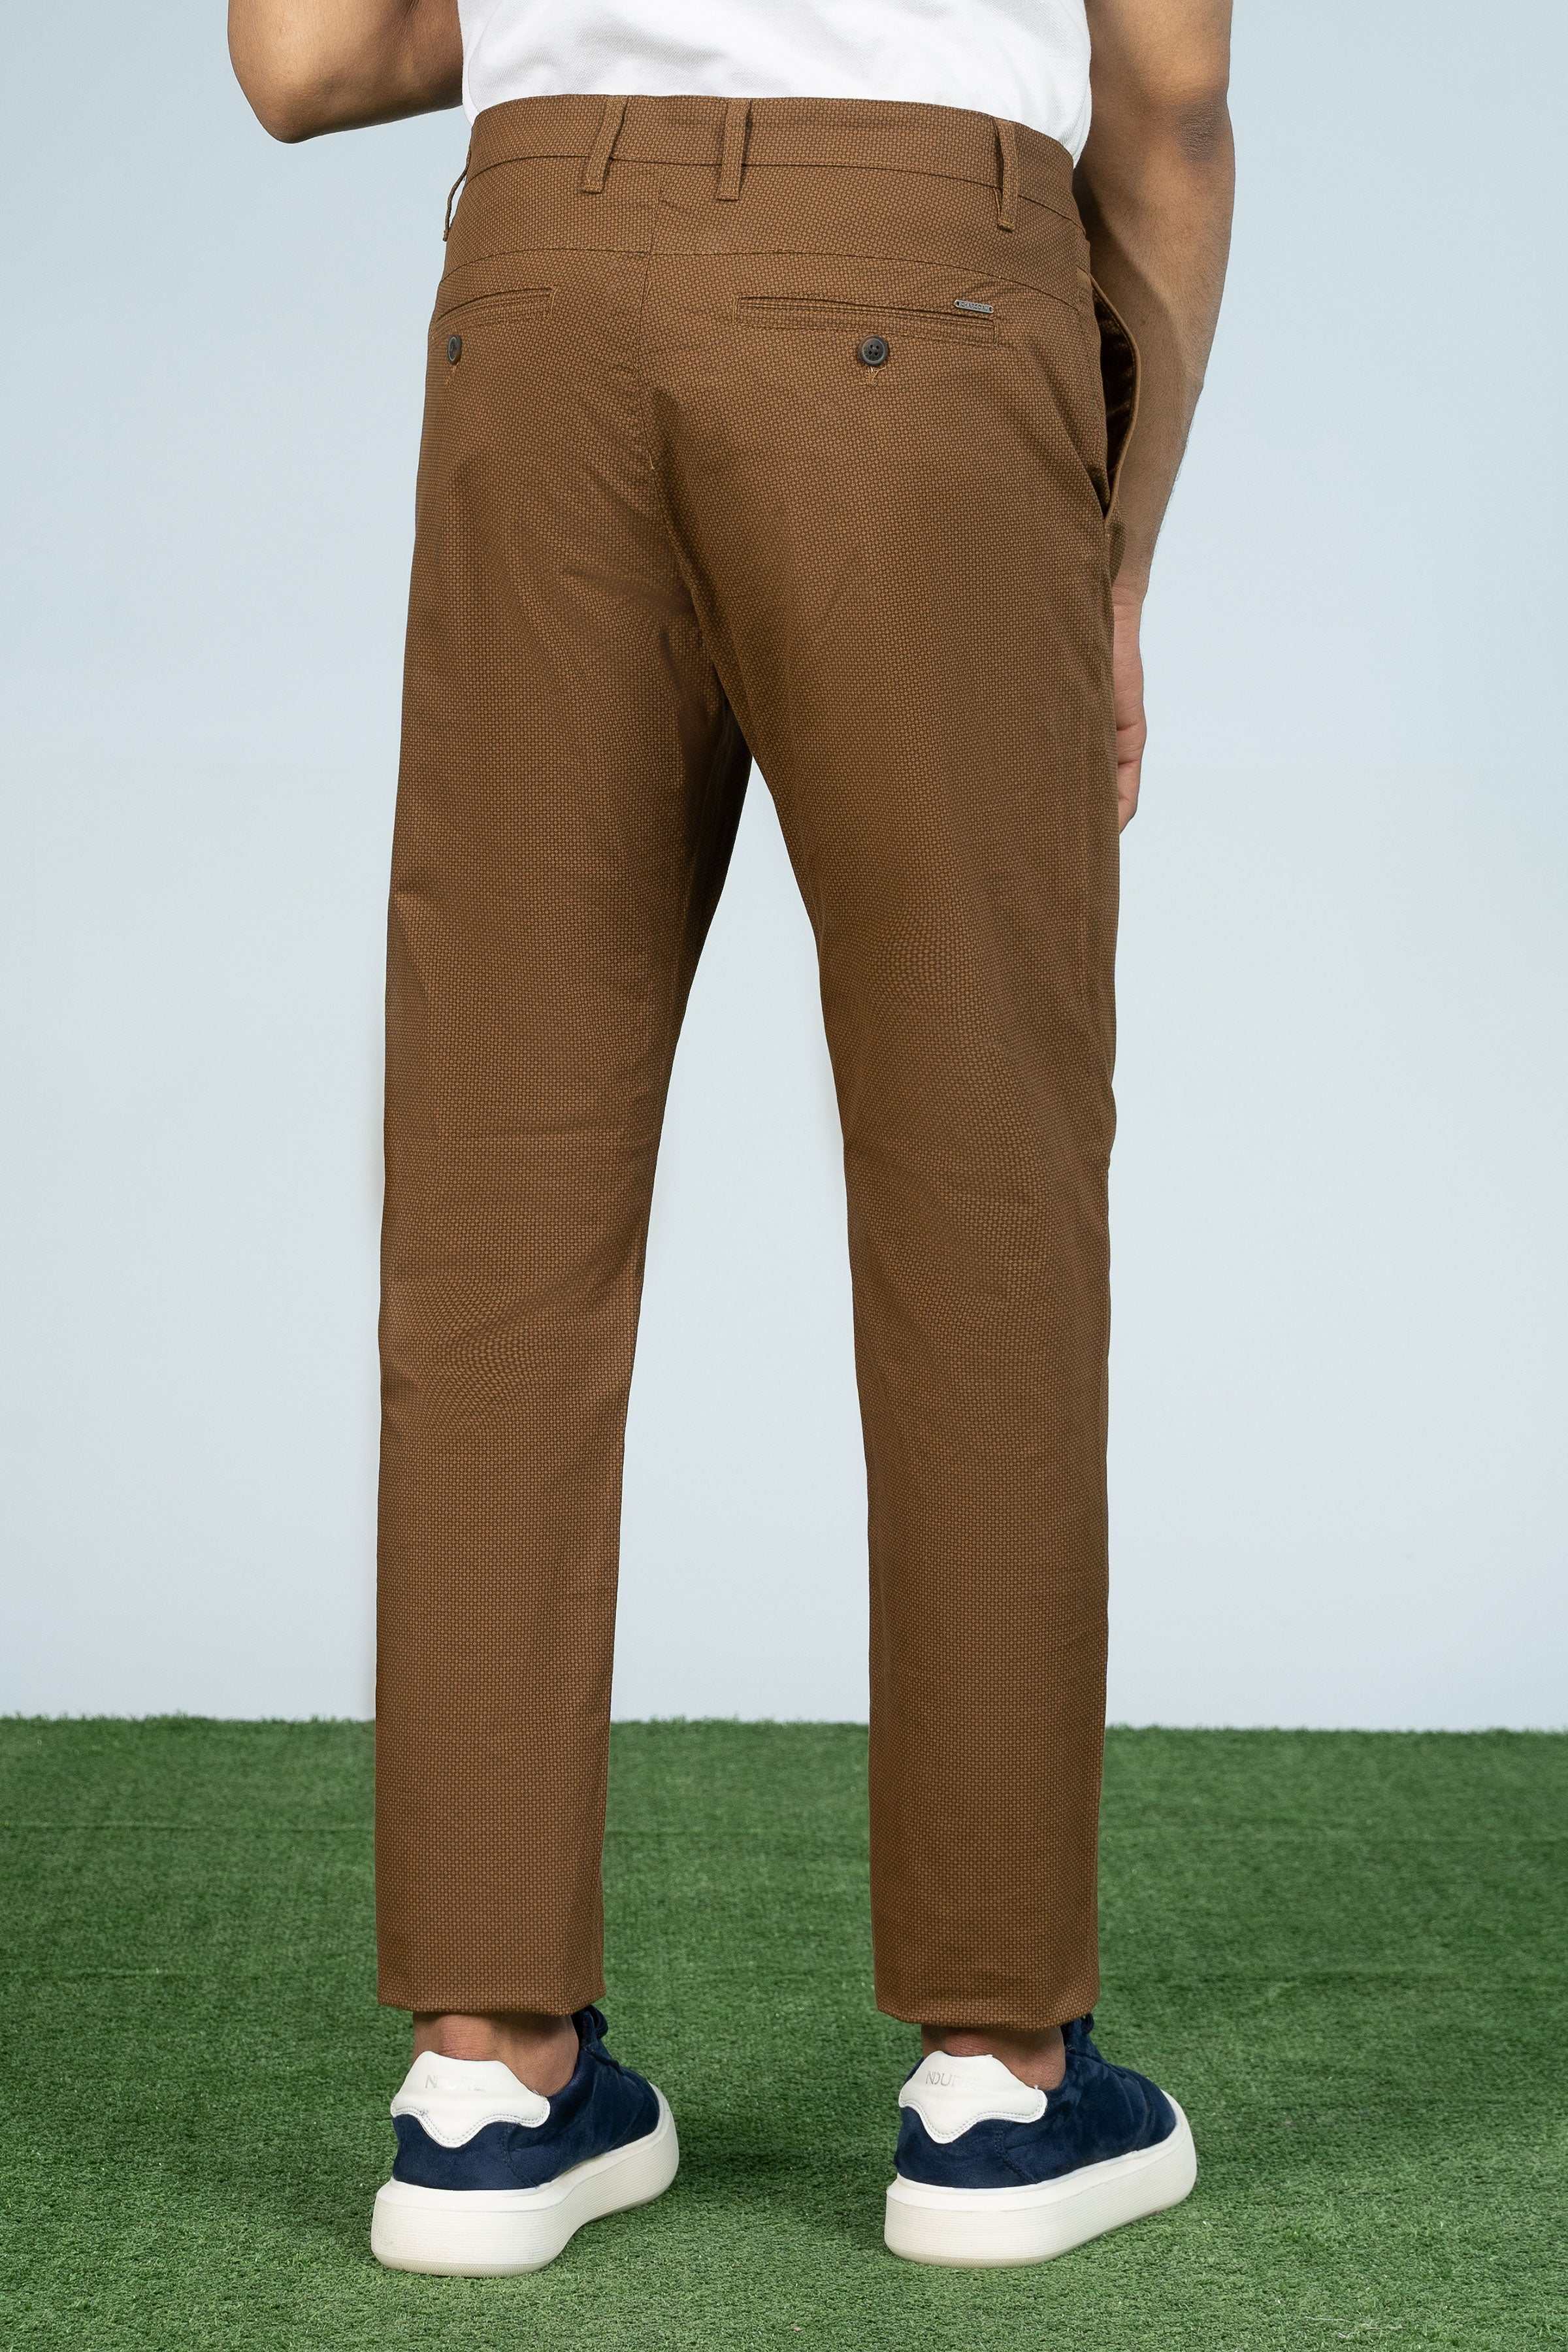 CROSS POCKET PRINTED PANT BROWN - Charcoal Clothing